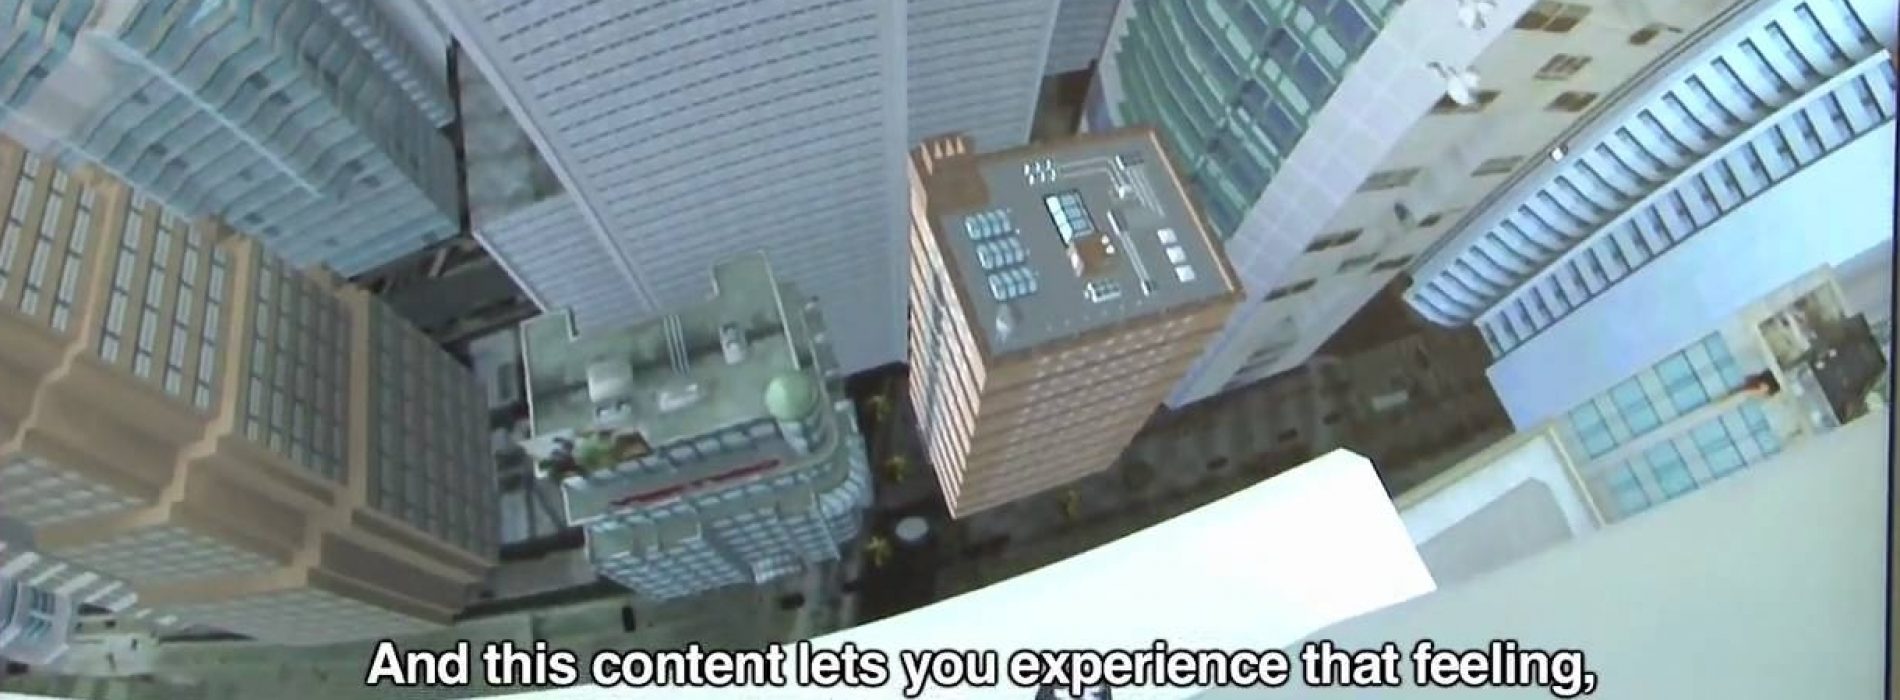 Hoe kan een virtuele wereld je van hoogtevrees afhelpen? (video)